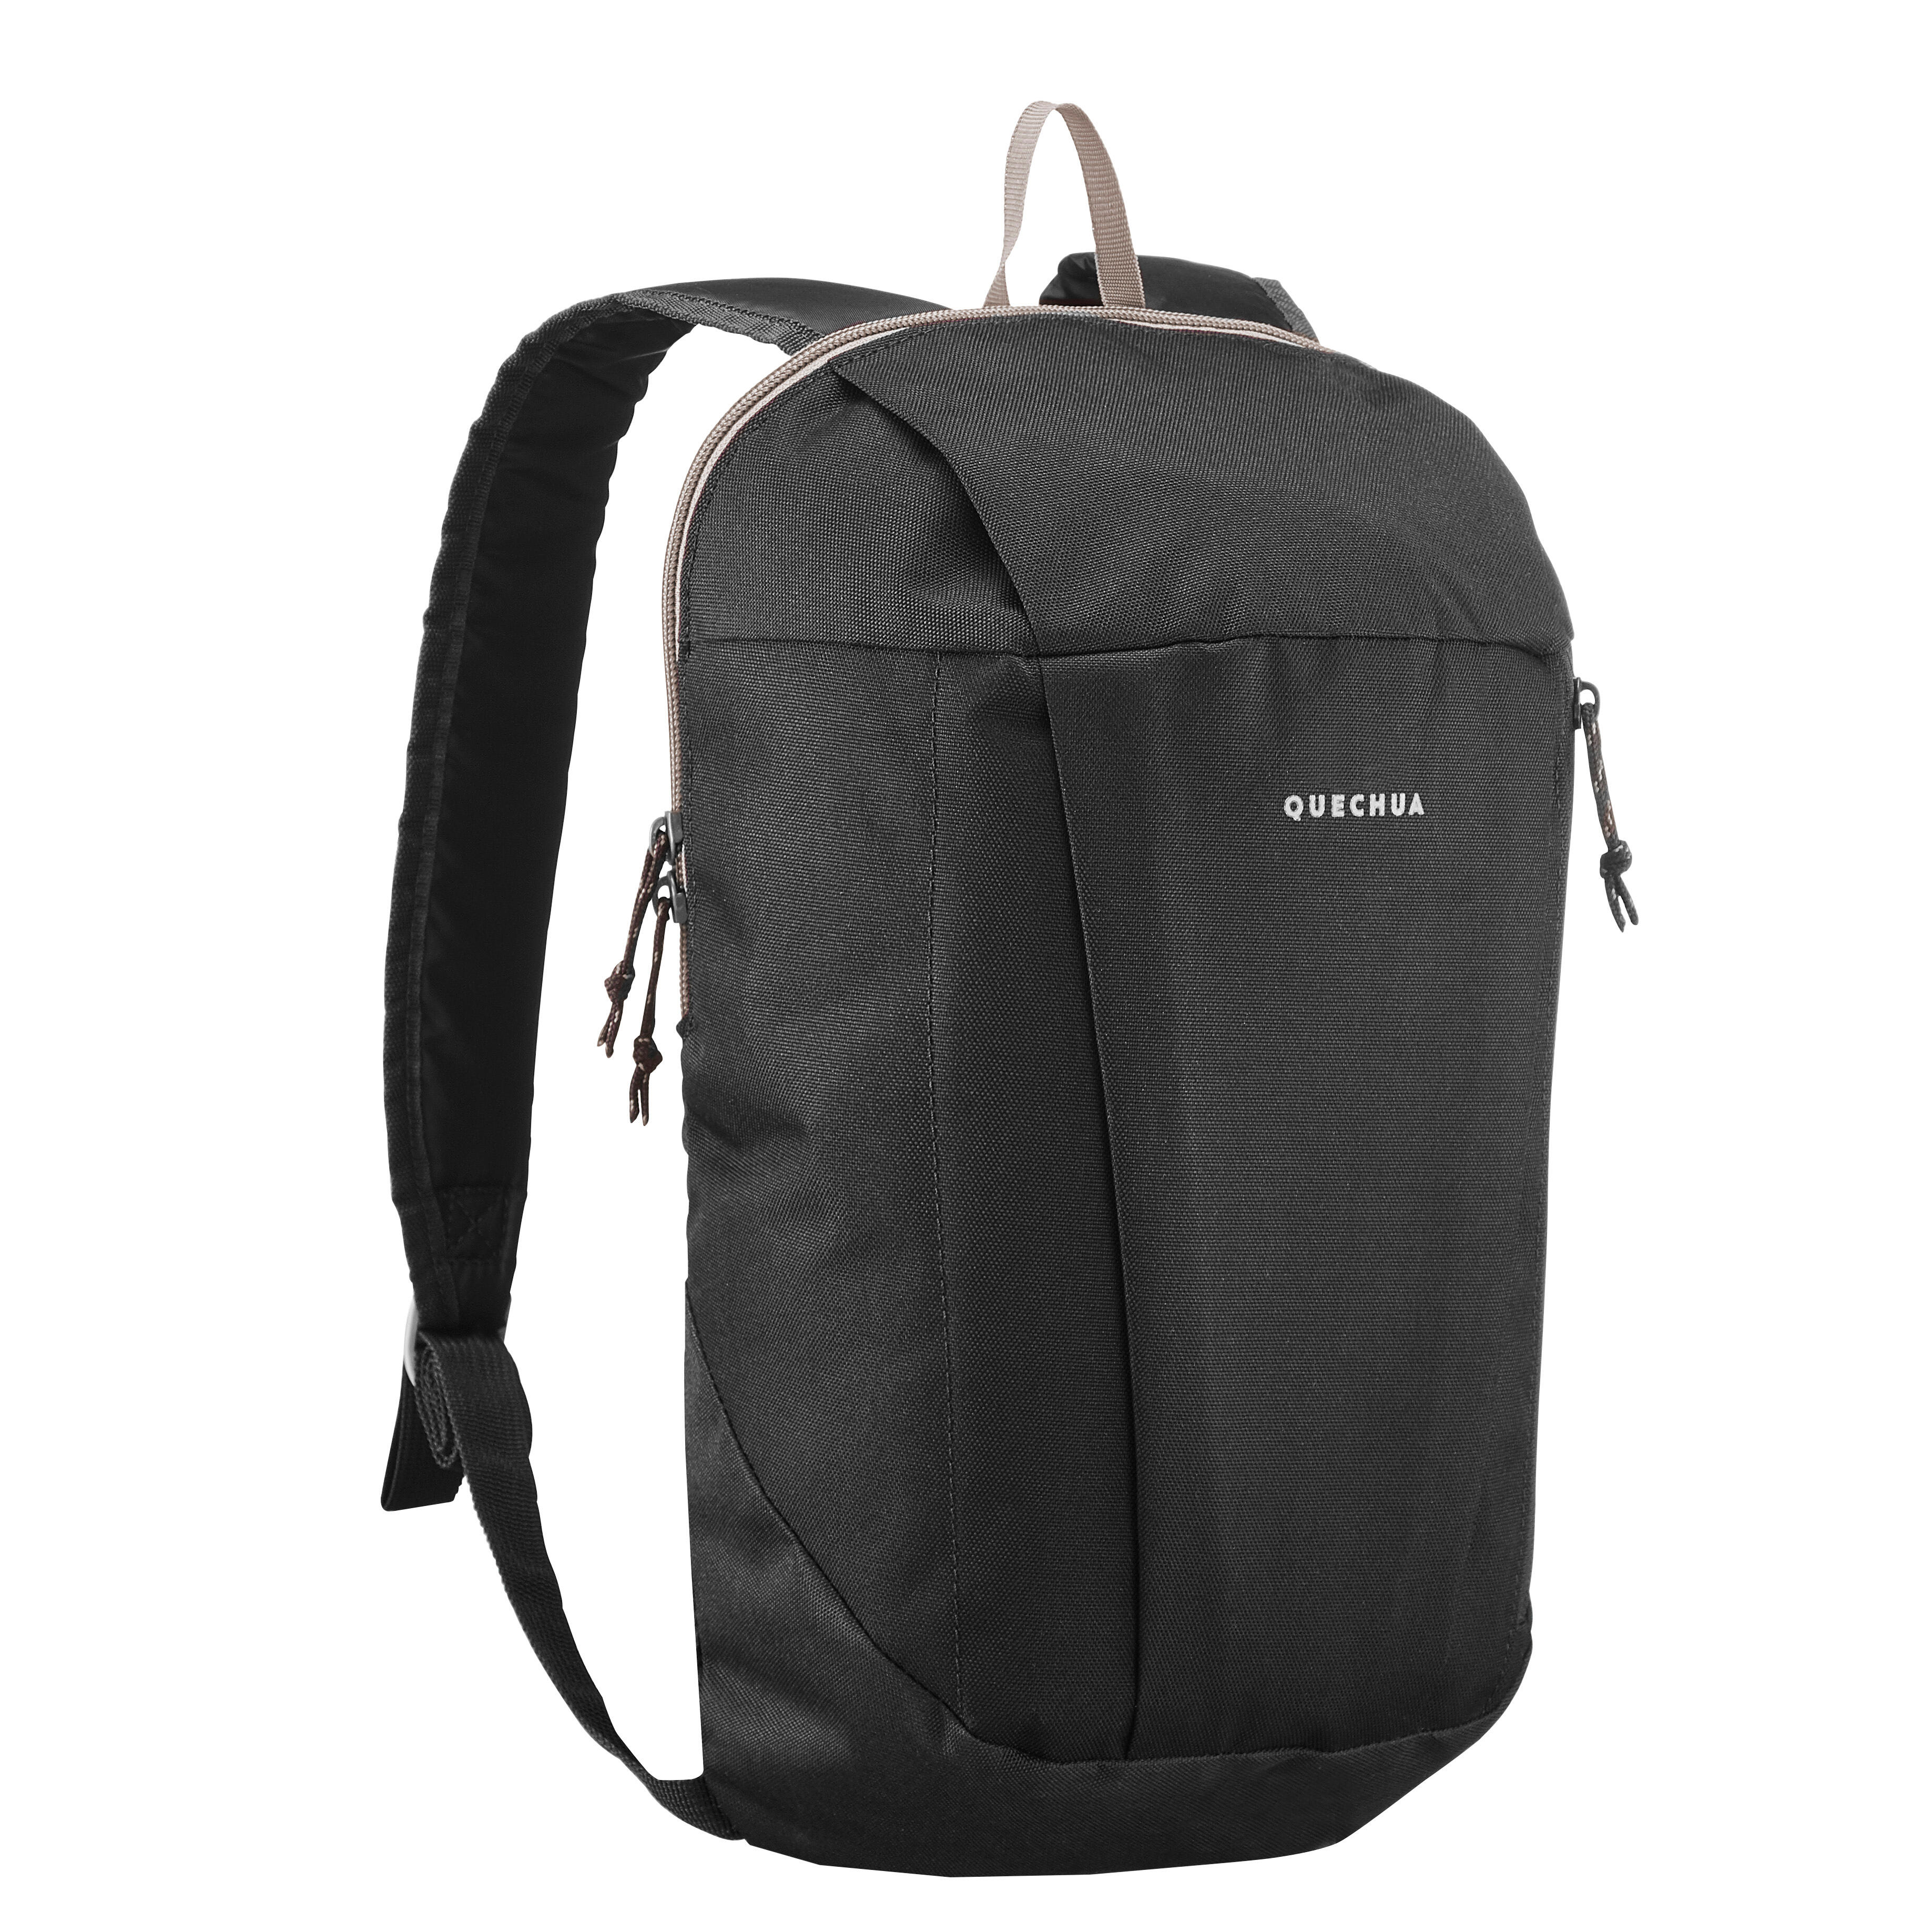 decathlon uk backpack